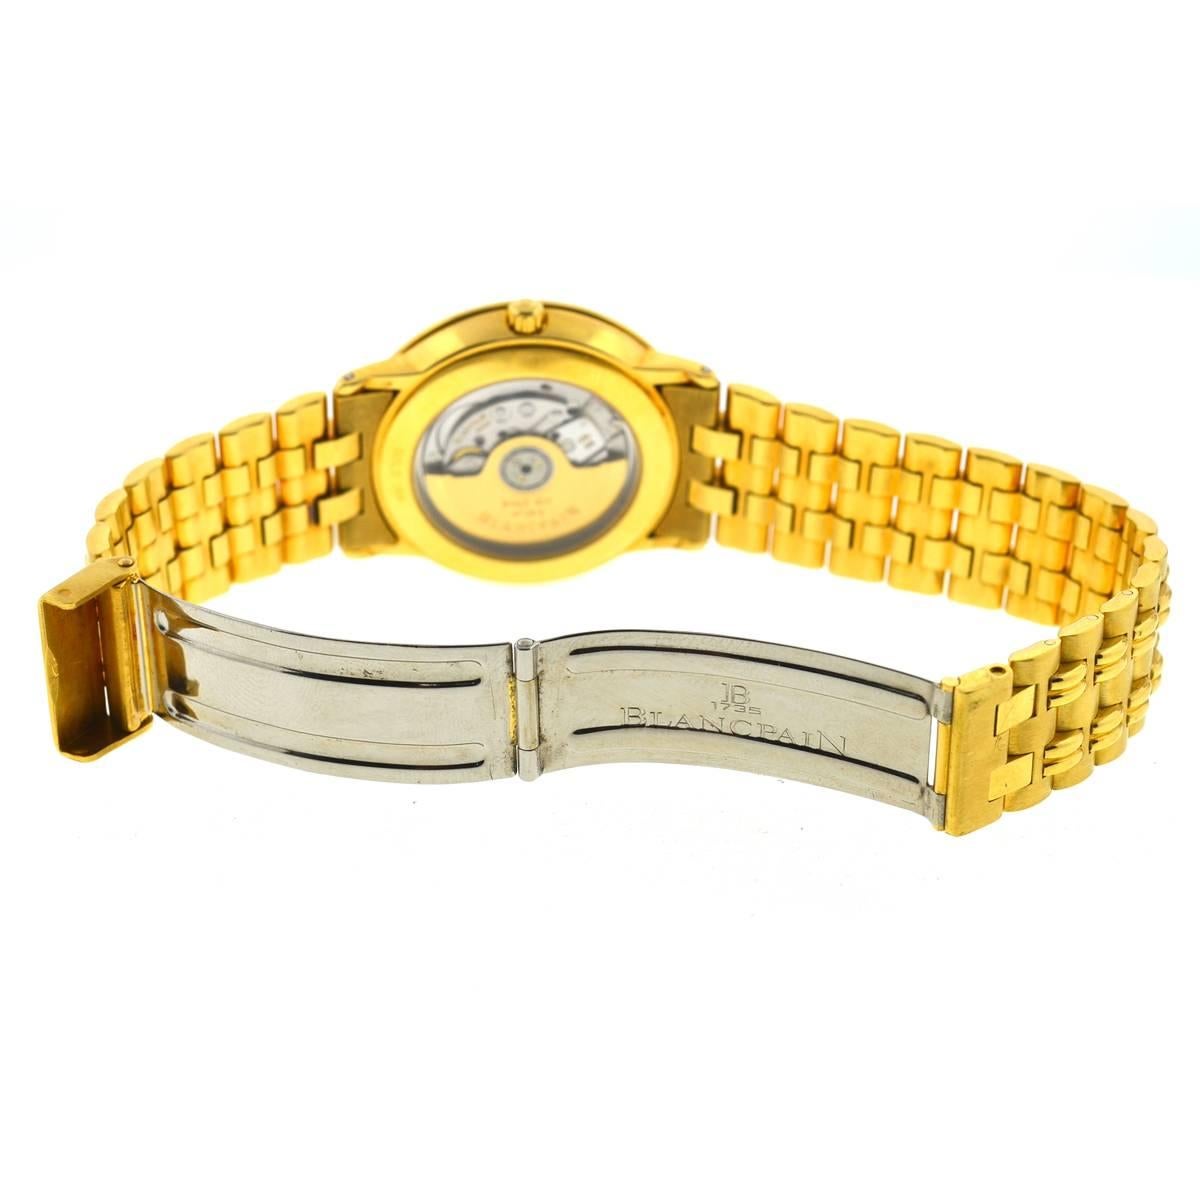 Blancpain Villeret 4795 Automatic Watch 18 Karat Yellow Gold 2